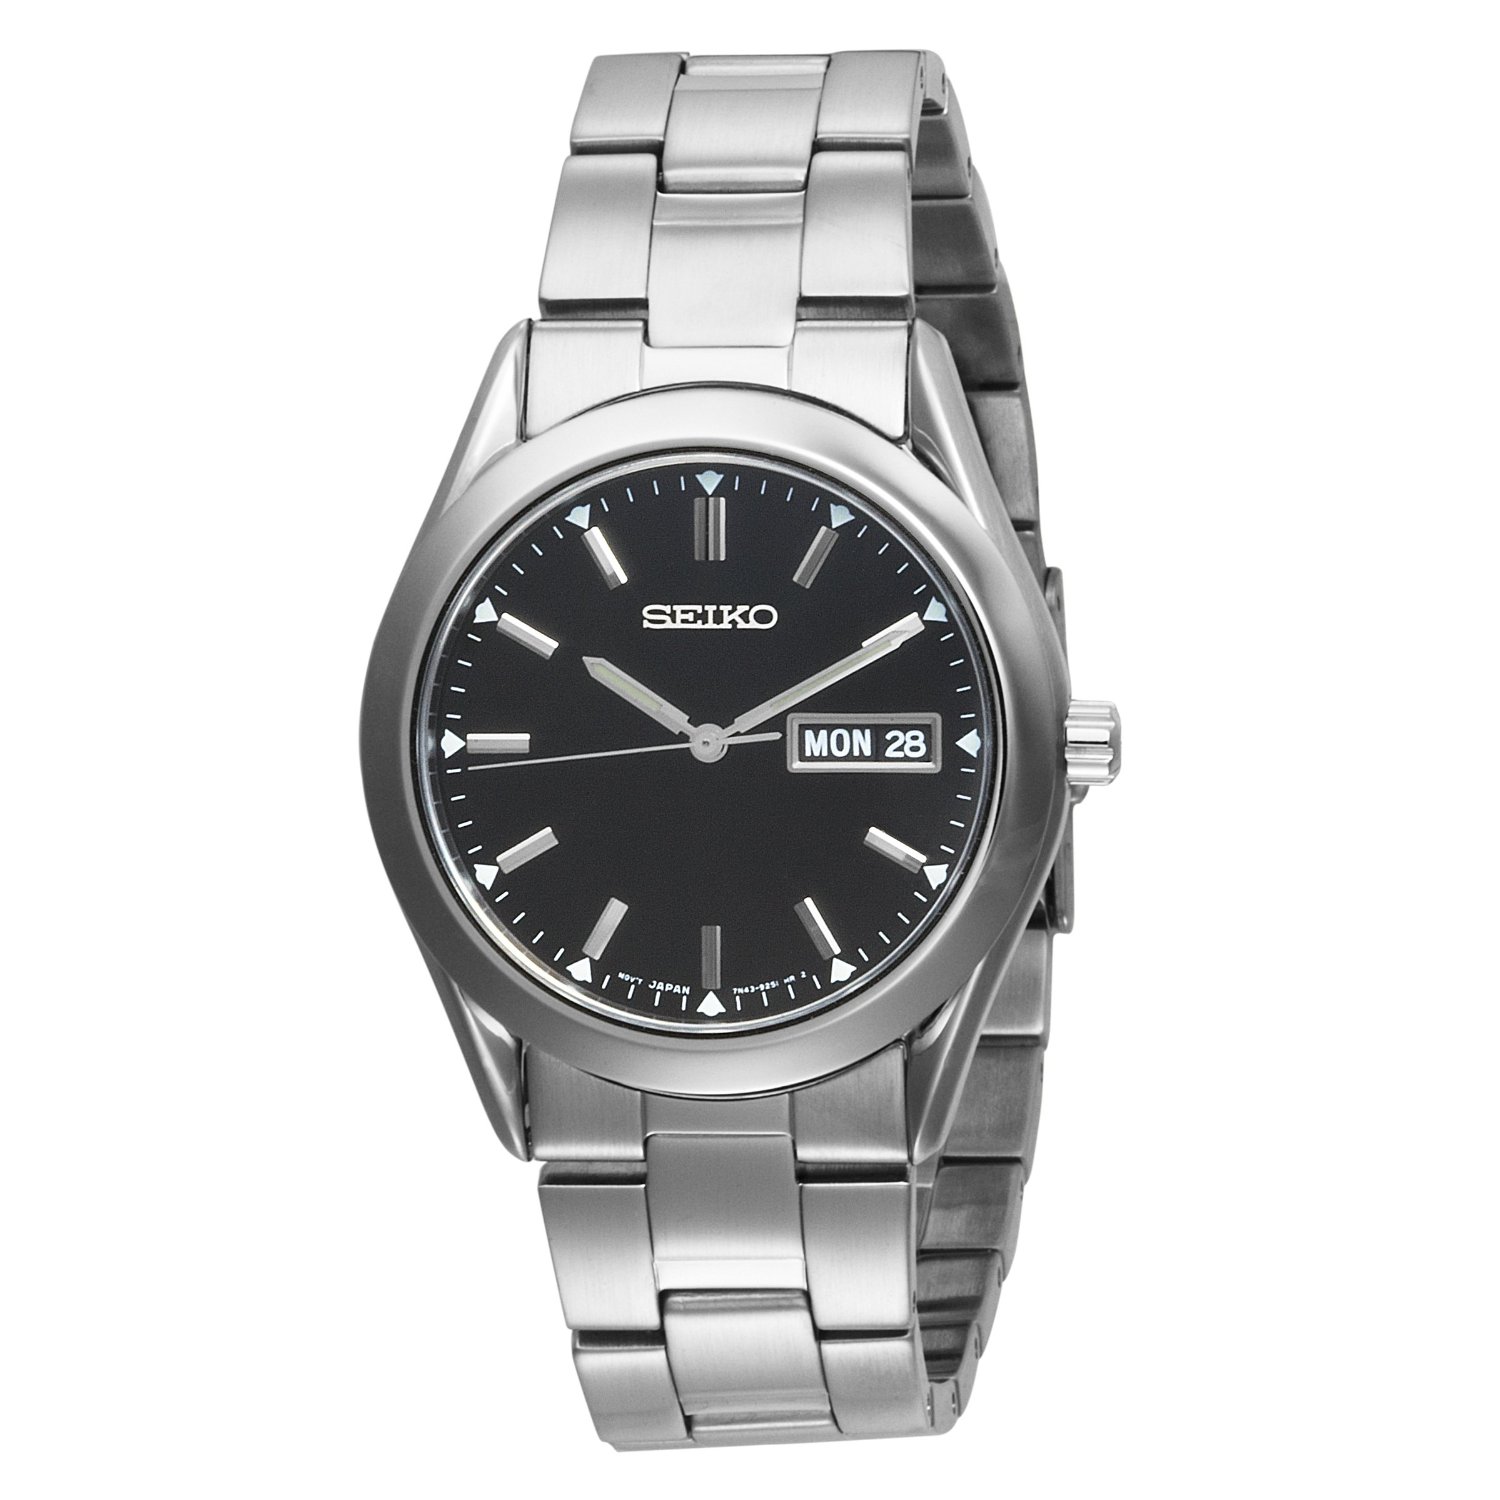 Seiko Men's SGGA49 Dress Silver-Tone Black Dial Watch | Seiko Watch 2017